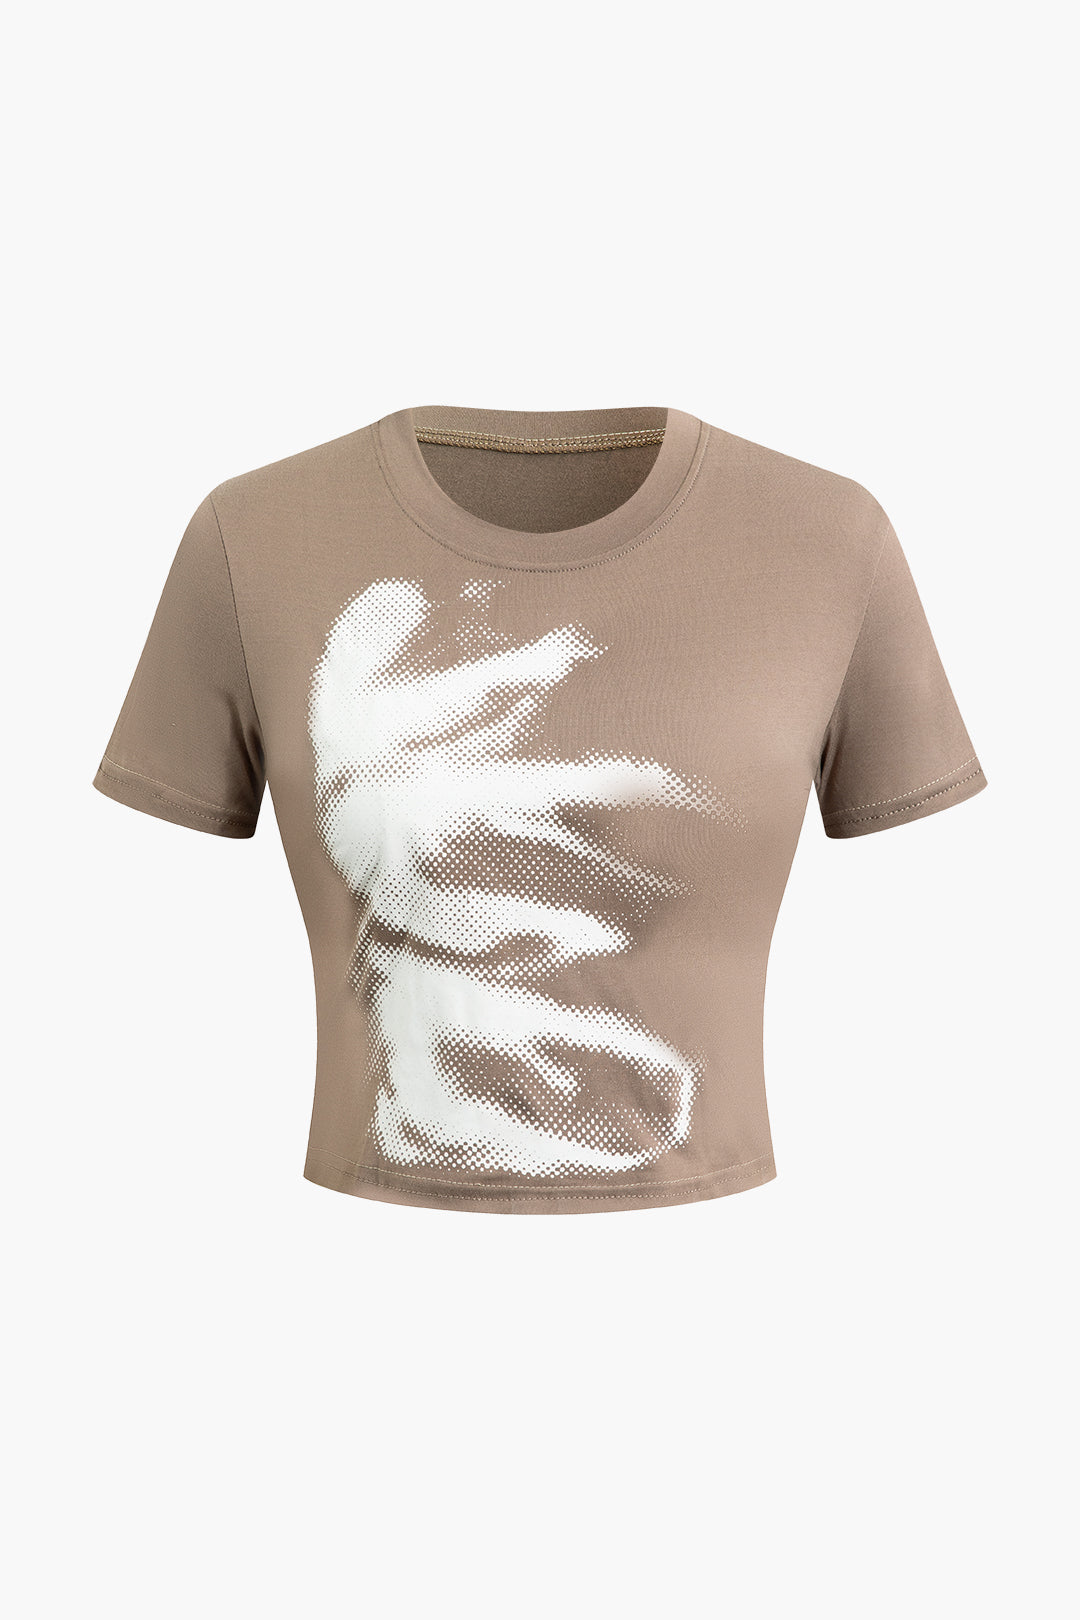 Abstract Print Round Neck Crop T-shirt